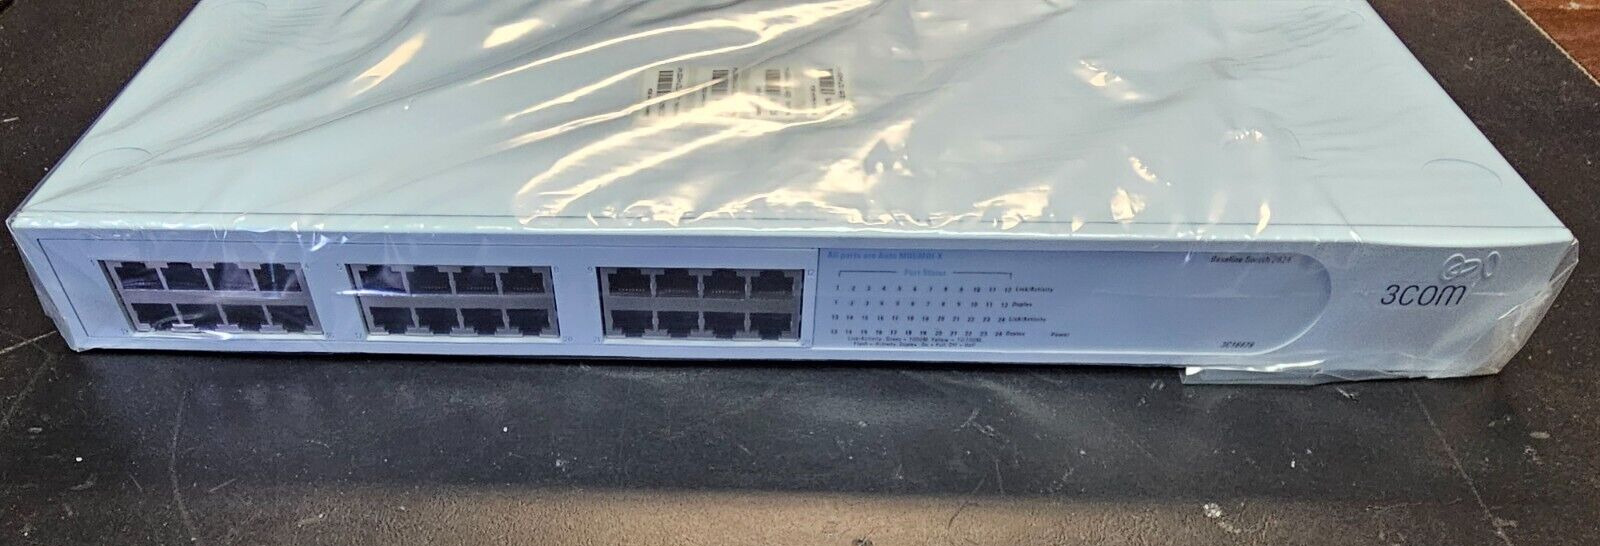 3COM Baseline Switch 2824(3C16479) - 24 Ethernet Port - Untested